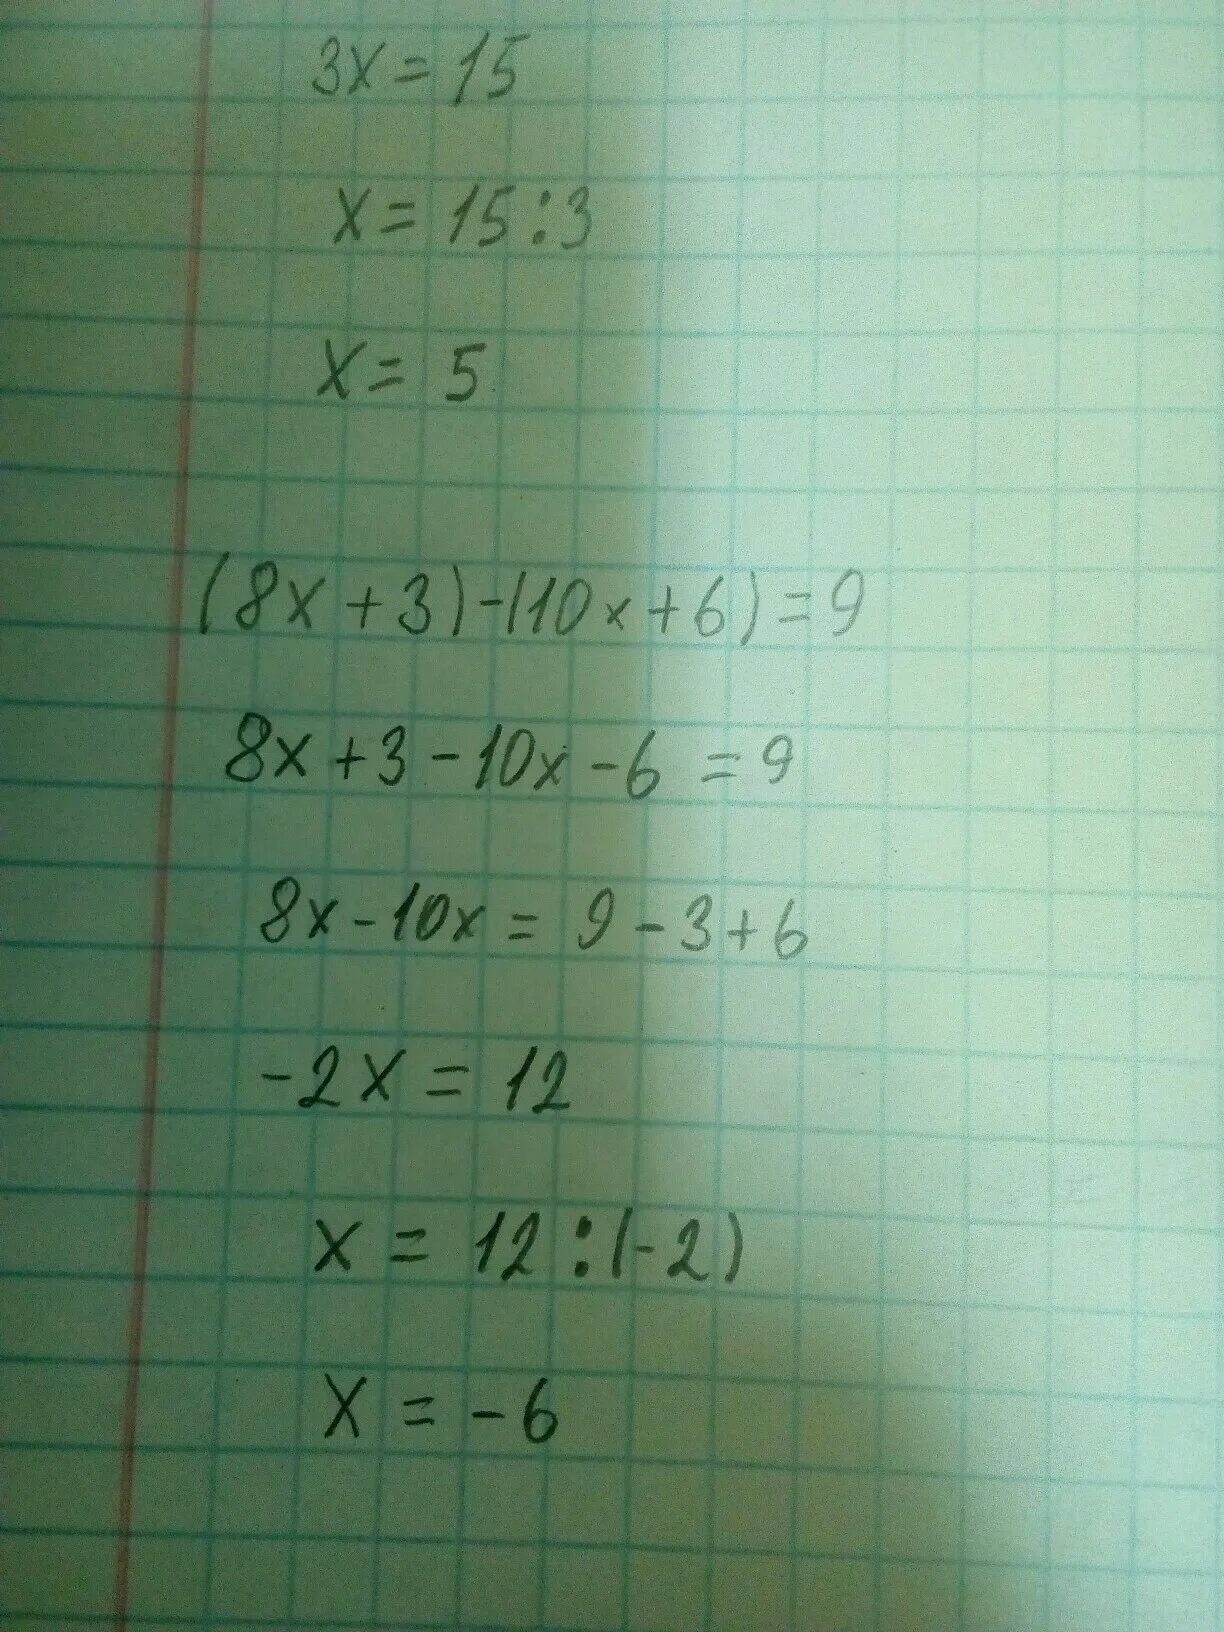 9 10 x 6 25. (10-X)(10+X). (8x+3)-(10x+6)=9. (2x-10)-(3x-4)=6. 4x-10=x+8 ответ.